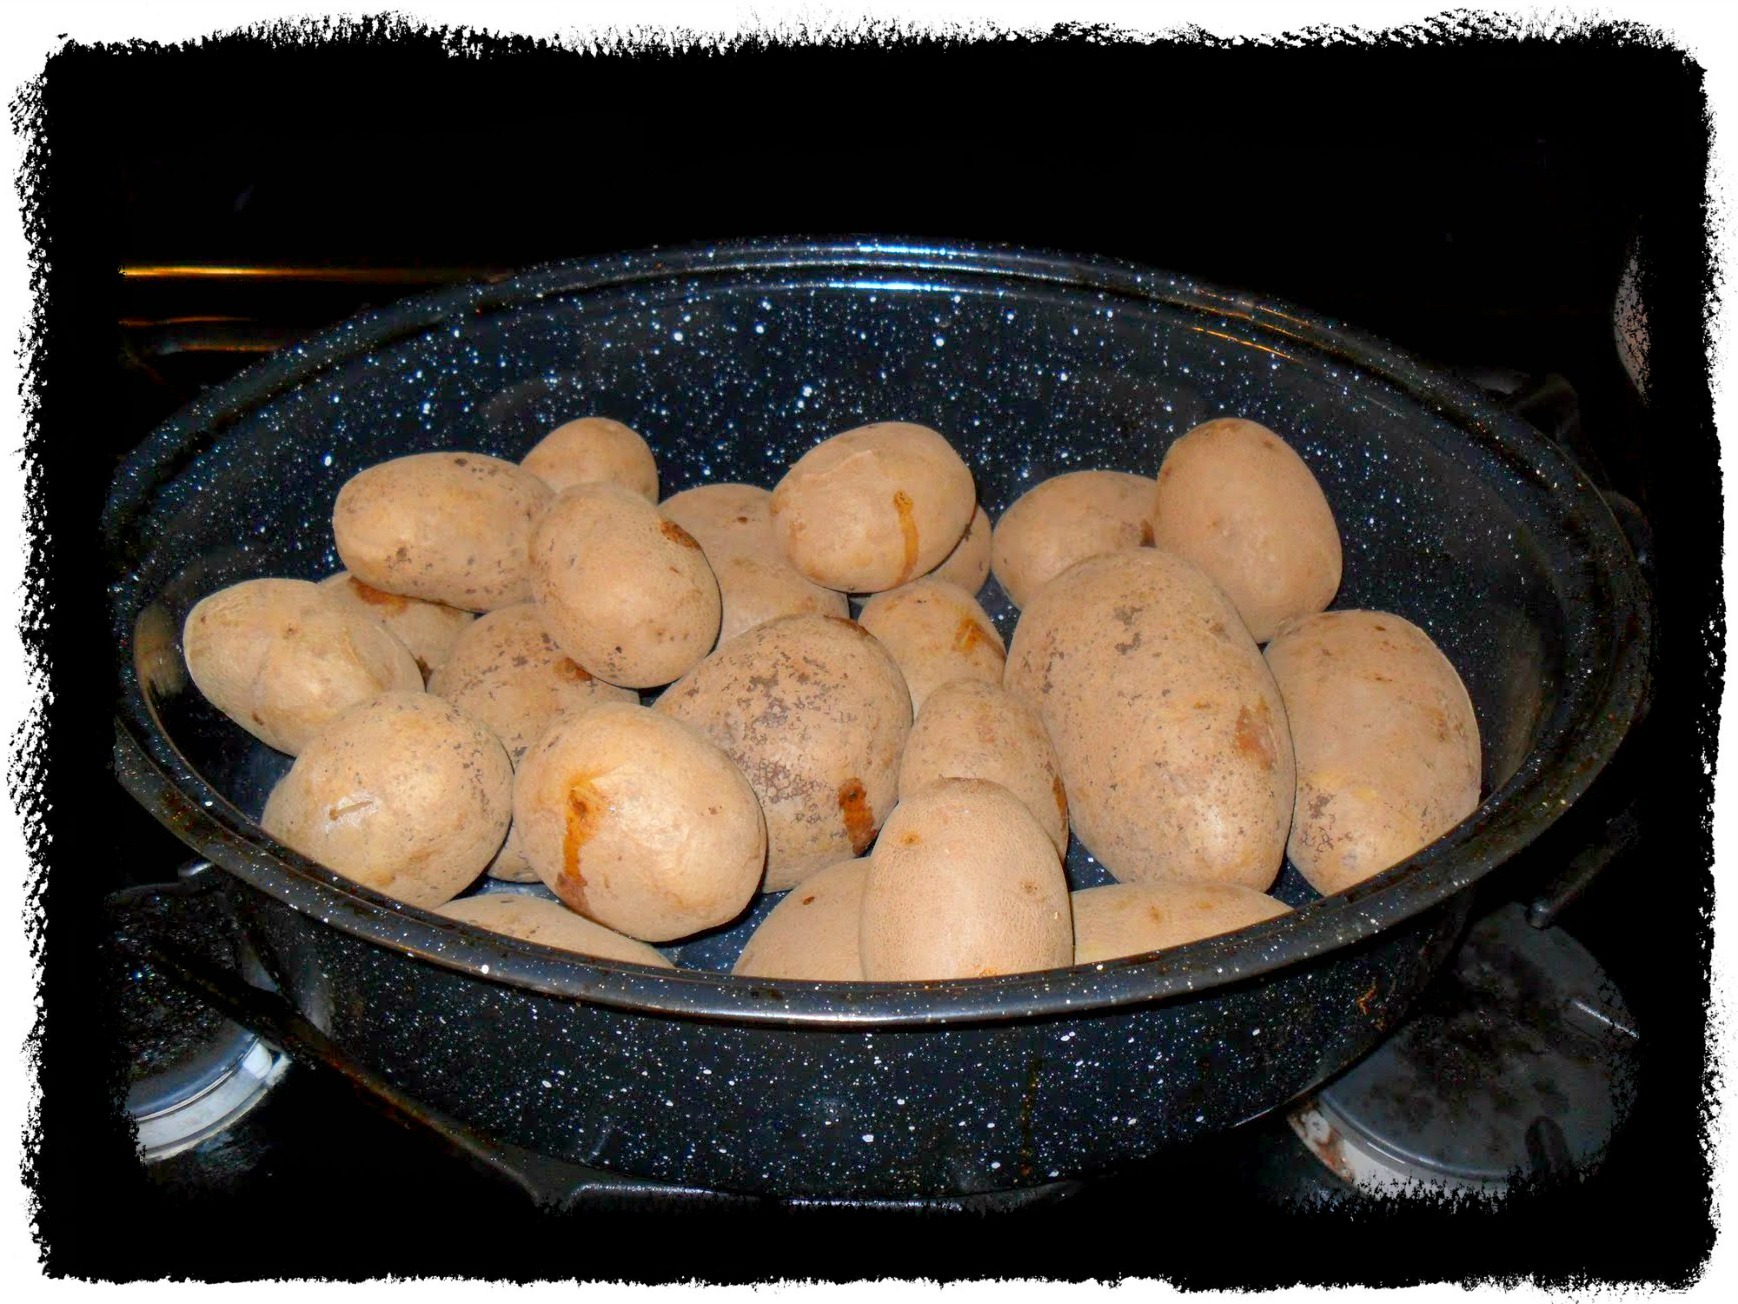 baked potatoes1.jpg